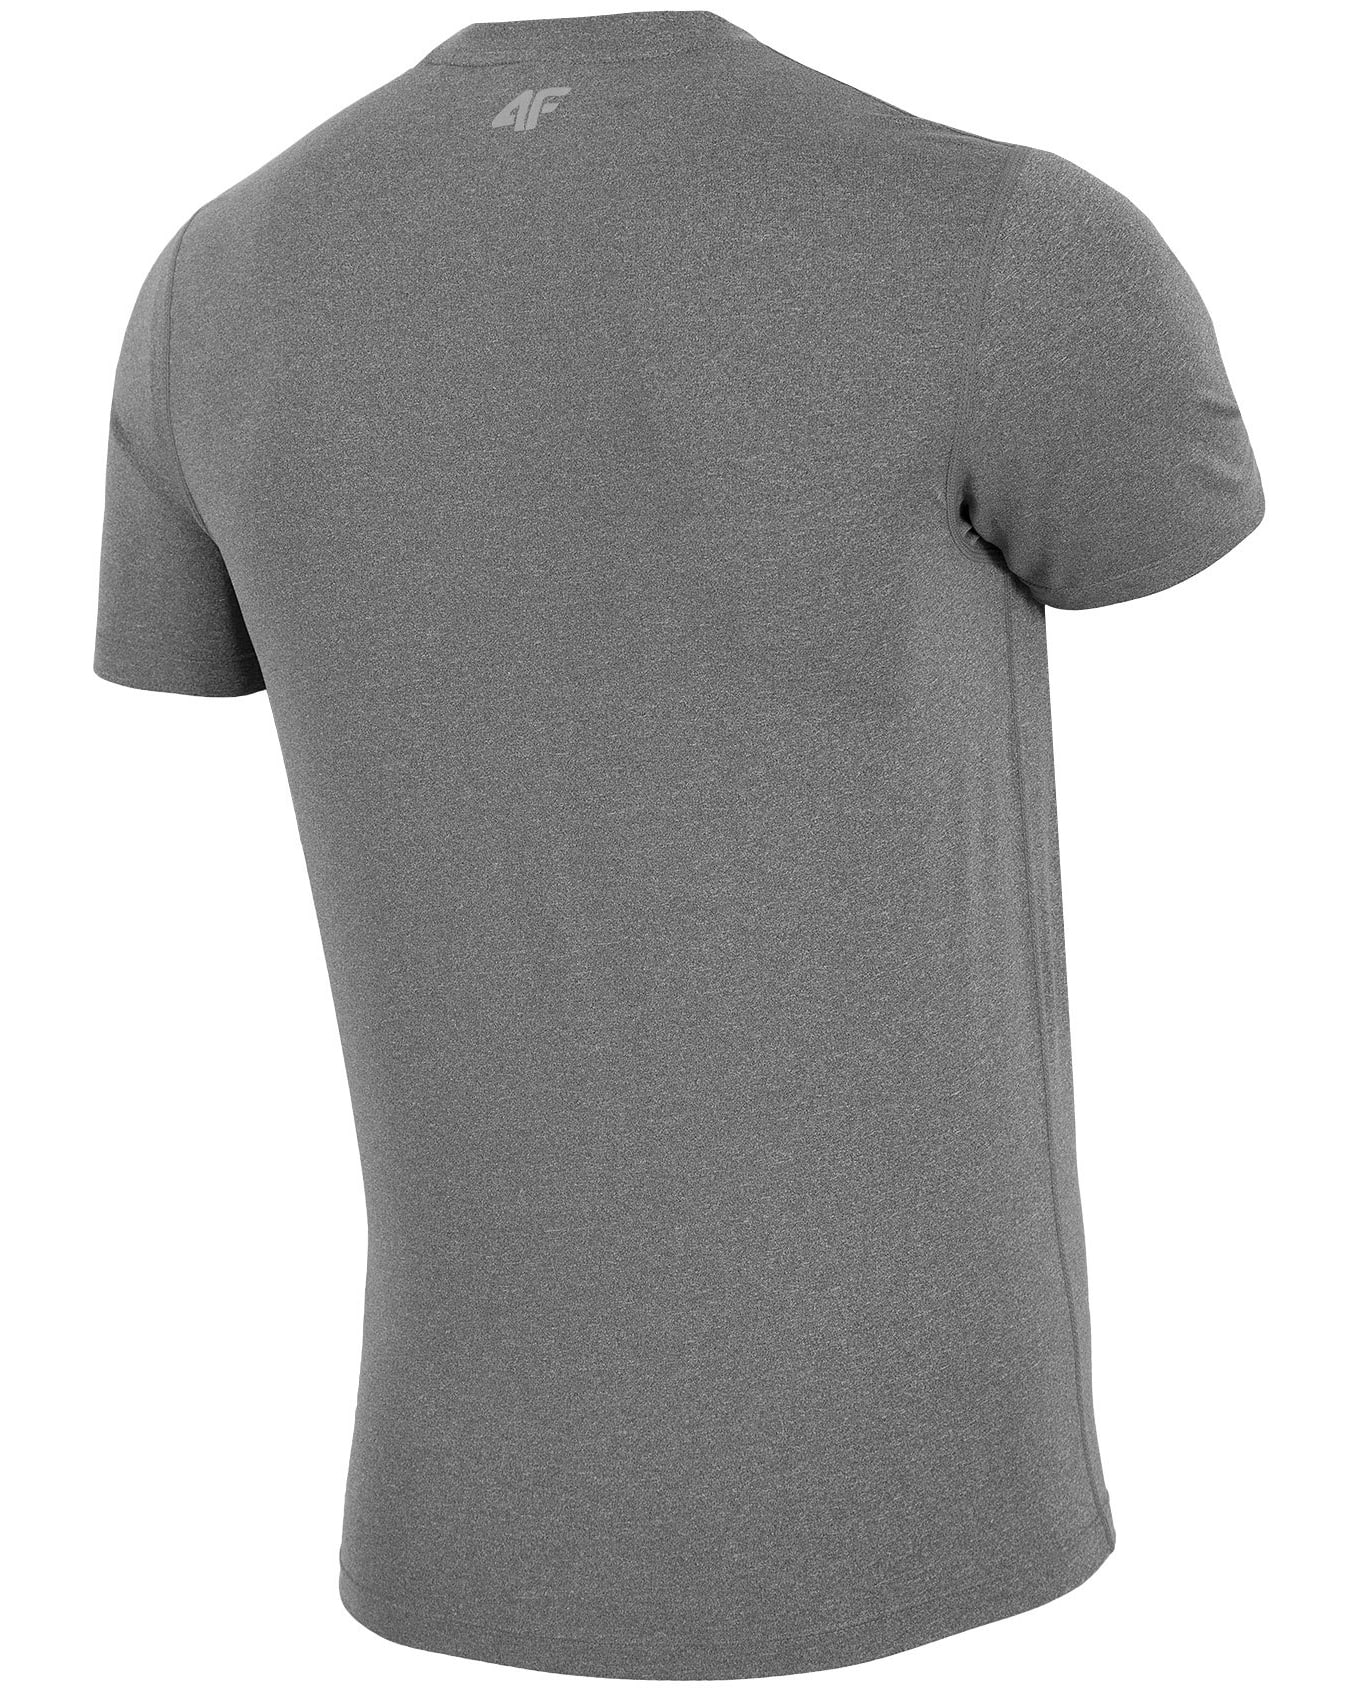 4F Man’s Functional T-shirt - Light Grey Melange